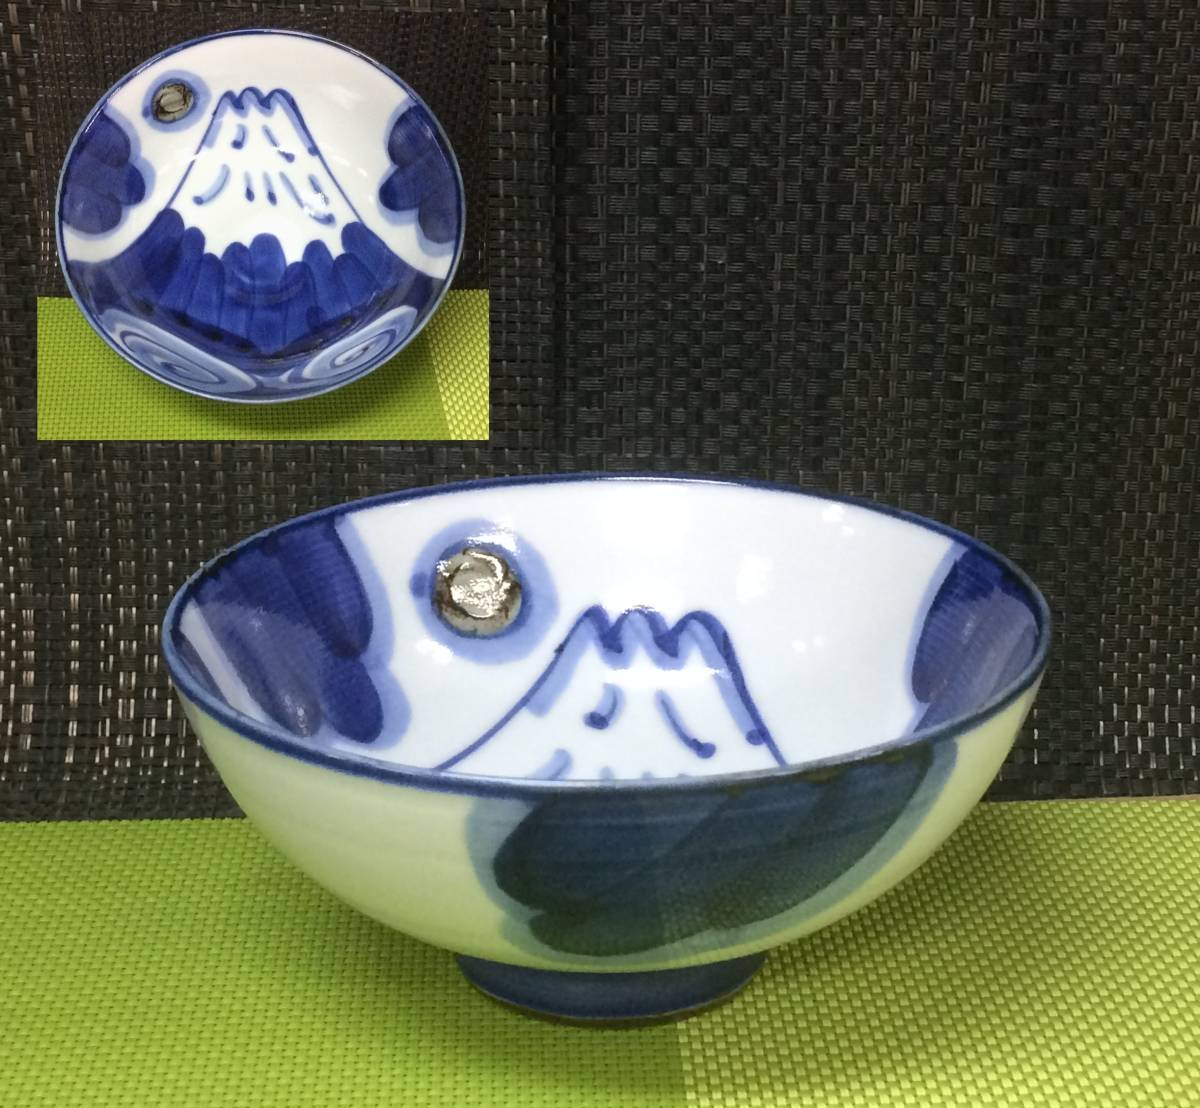 Neu [Sofortkauf] Reisschale Arita Ware handbemalt gefärbt Mt. Fuji Teeschale 1 Stück, Geschirr, Japanisches Geschirr, Reisschüssel